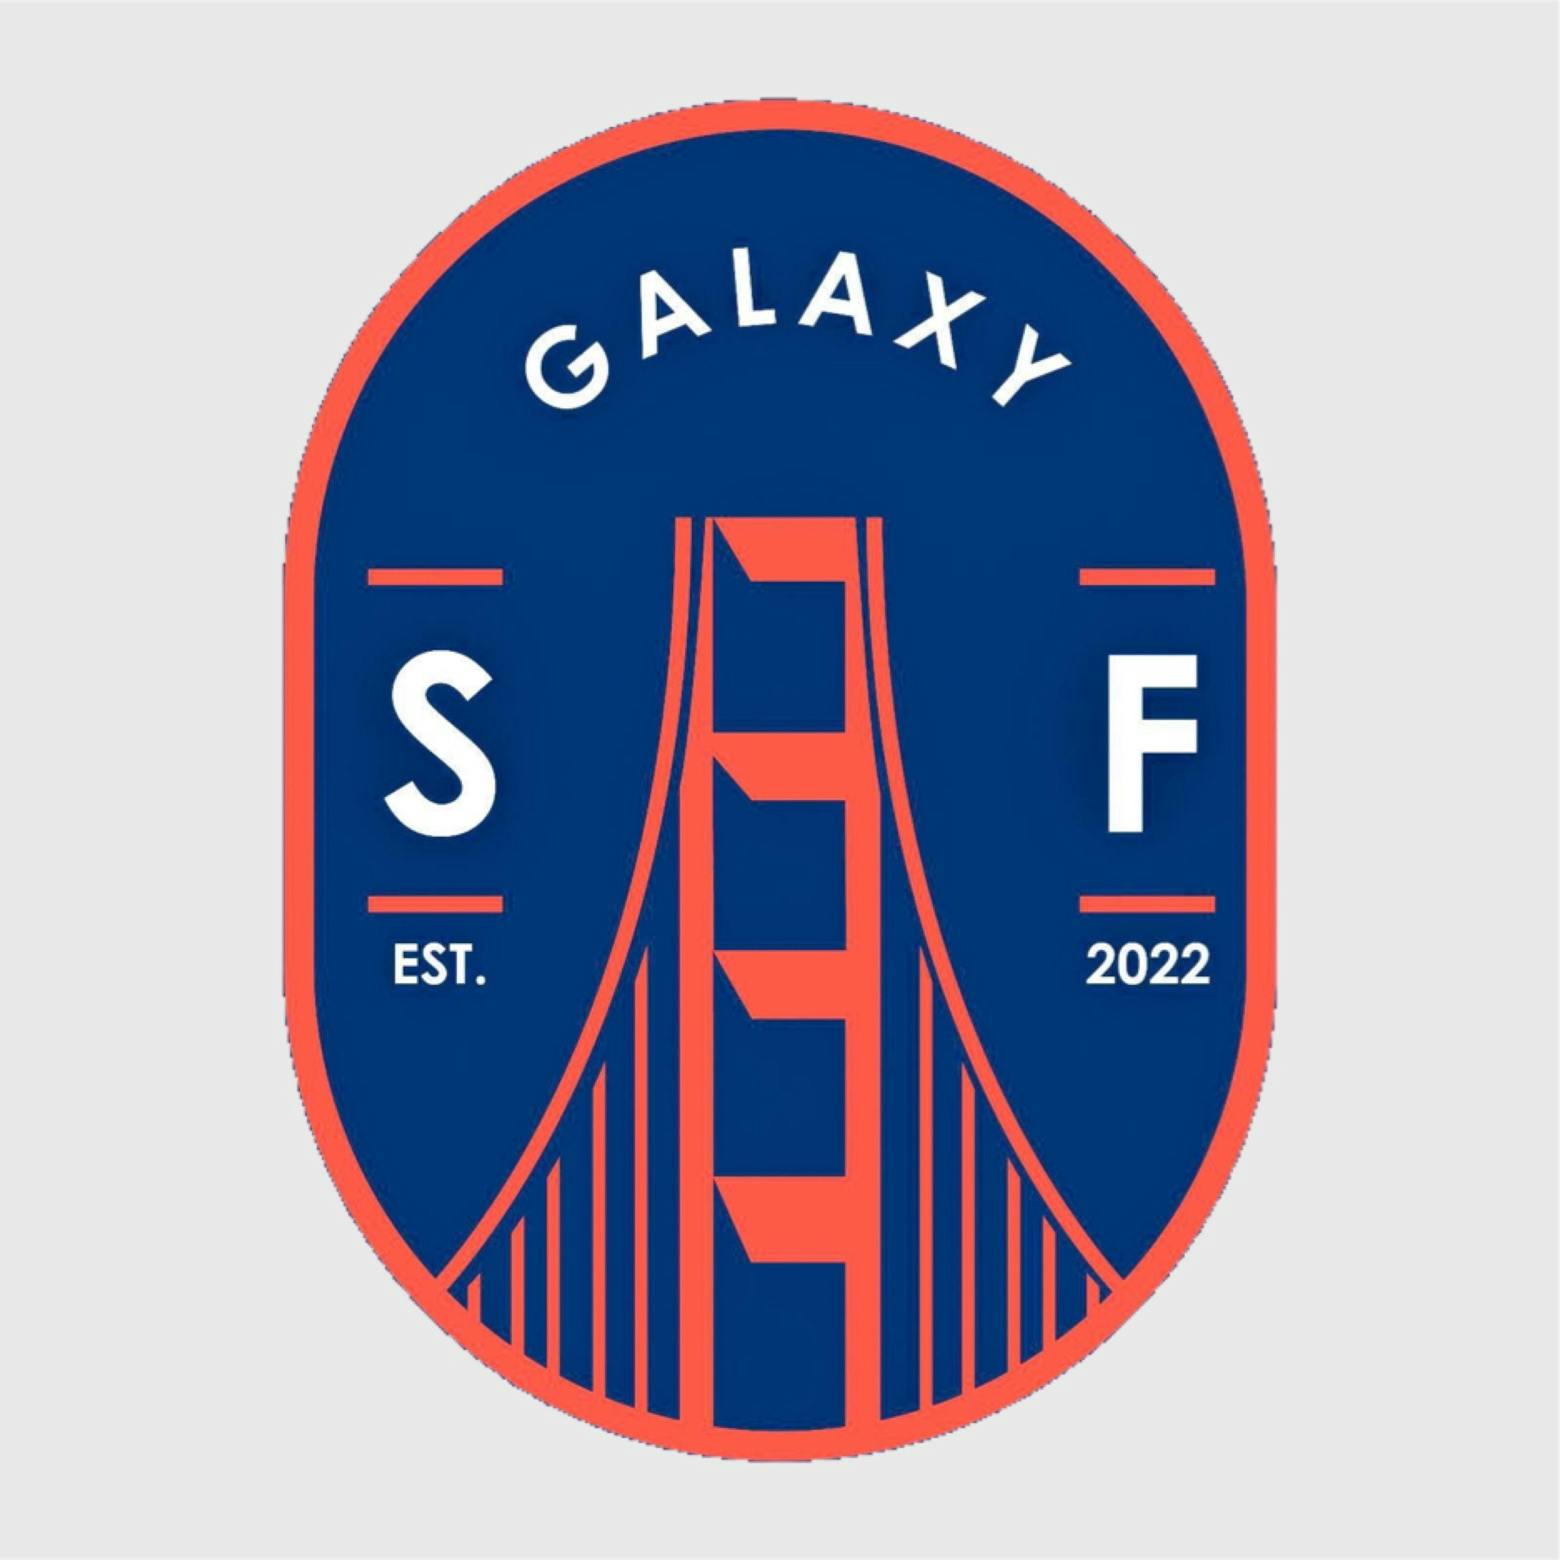 San Francisco galaxy